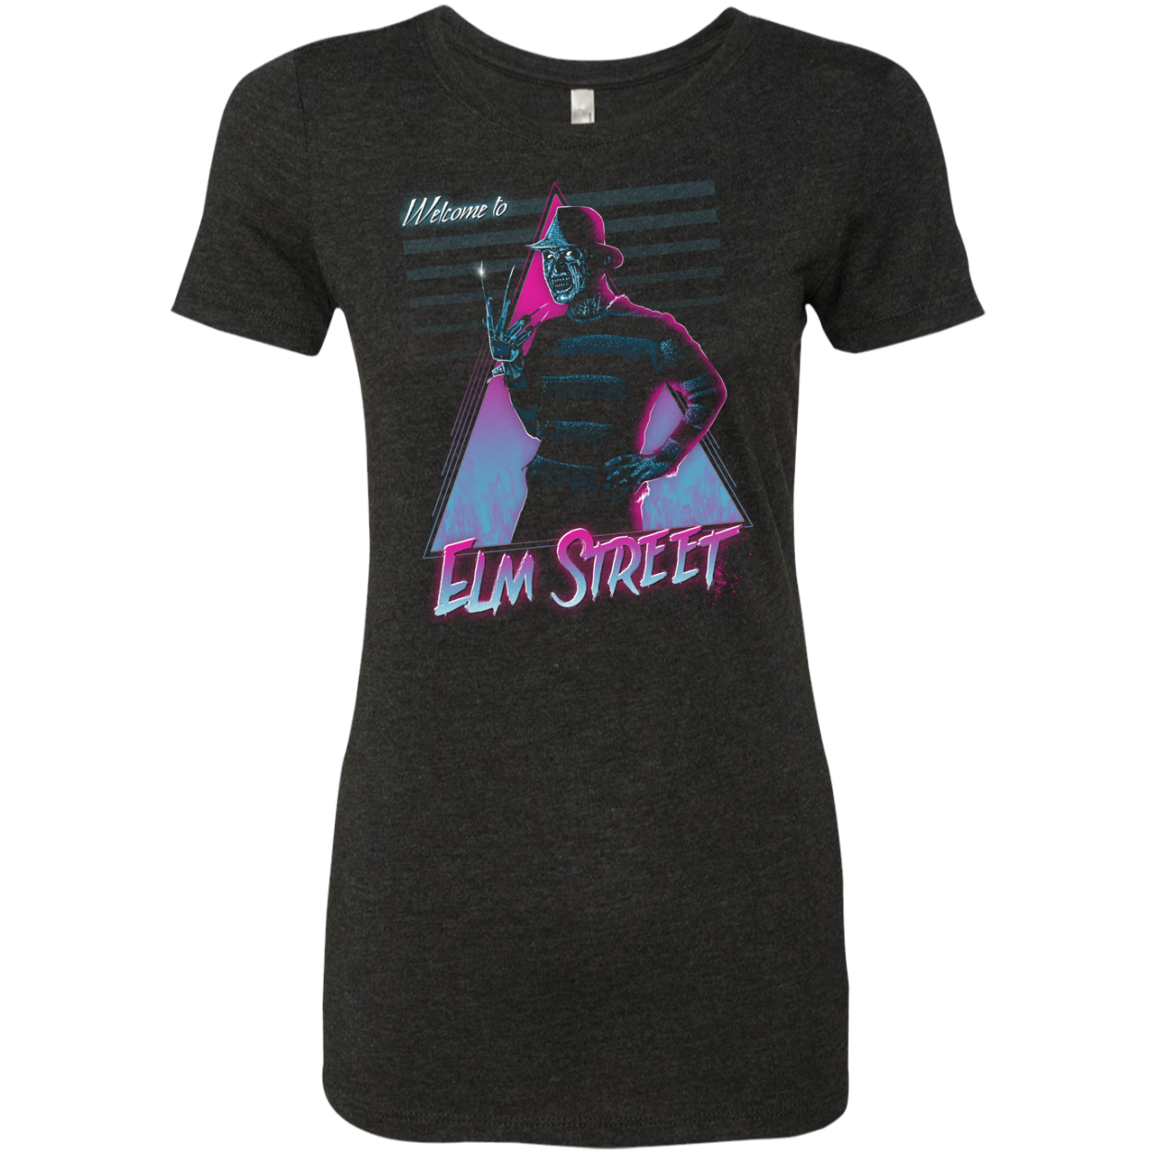 Welcome to Elm Street Women's Triblend T-Shirt